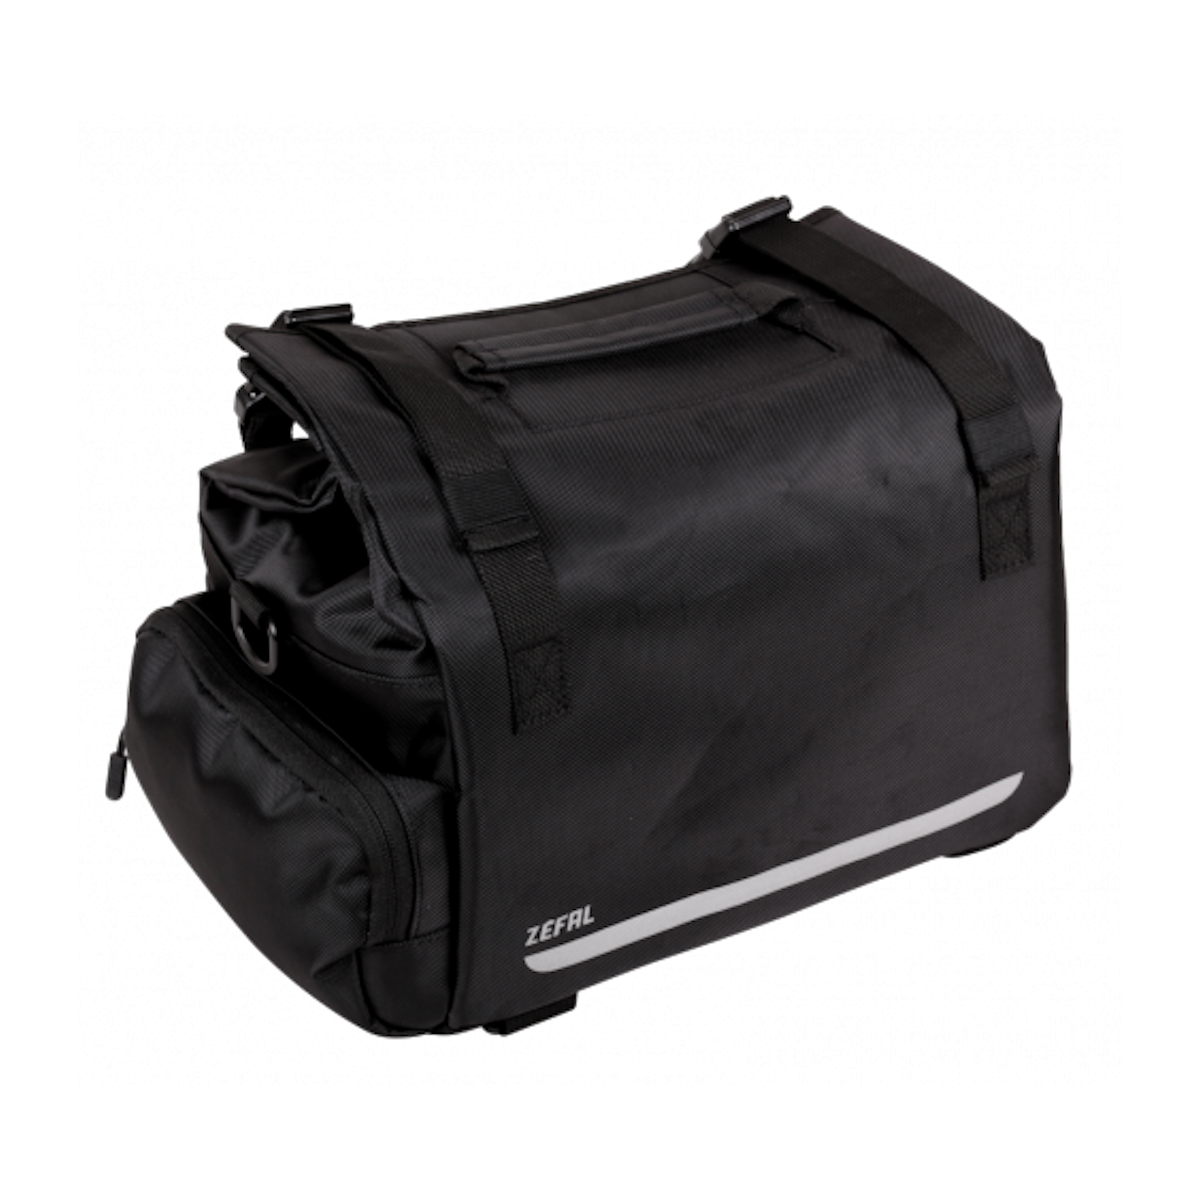 ZEFAL Z TRAVELER 60 20L pannier bag - black